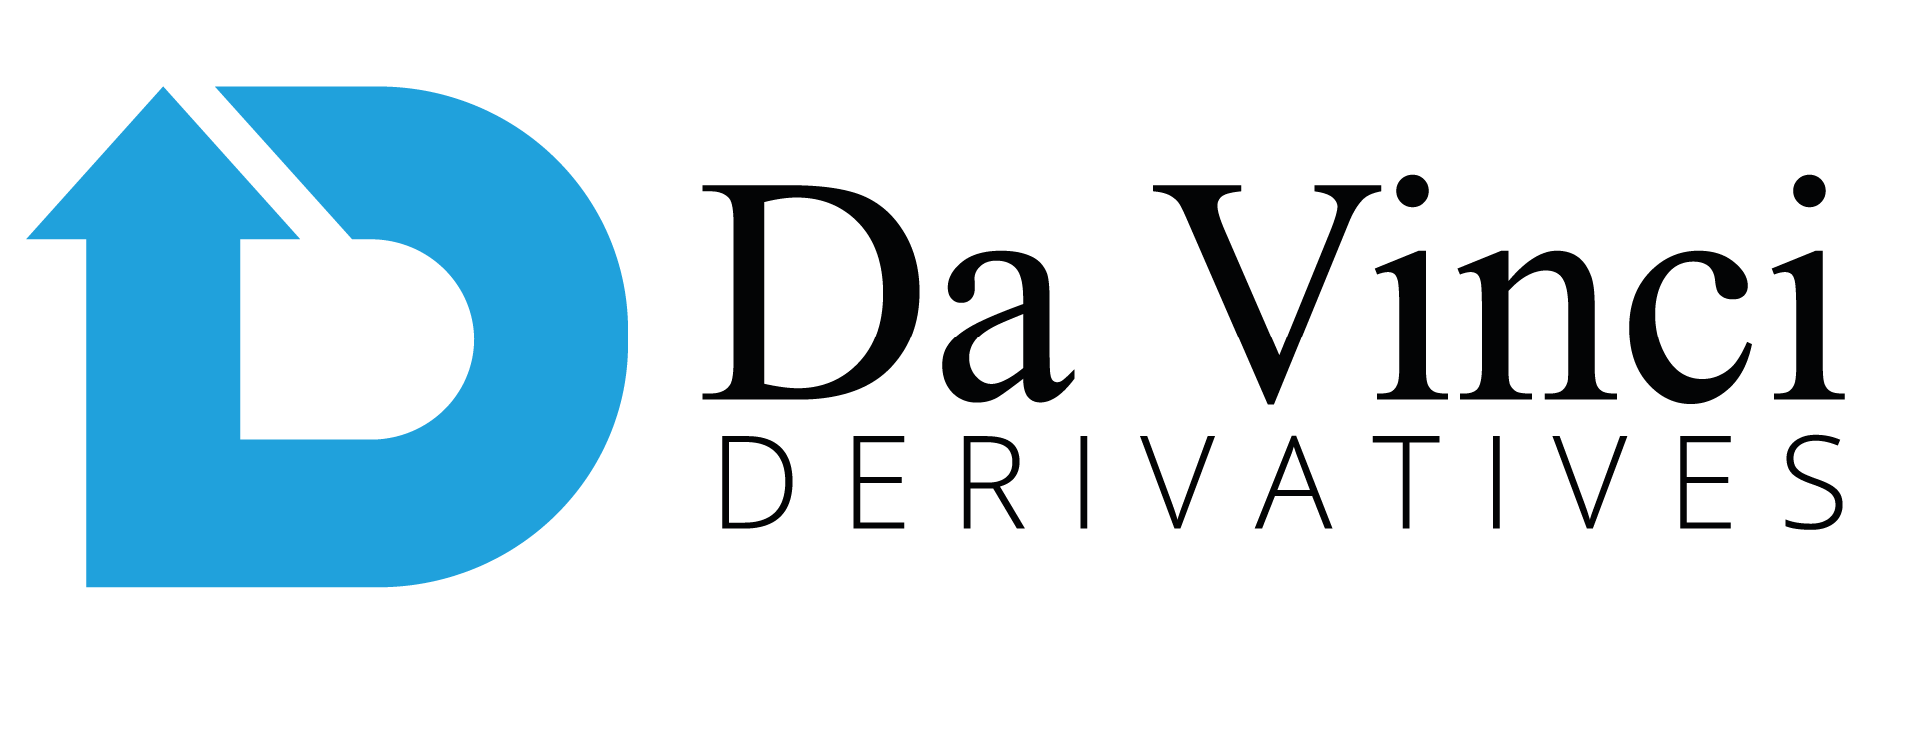 Da Vinci Derivatives